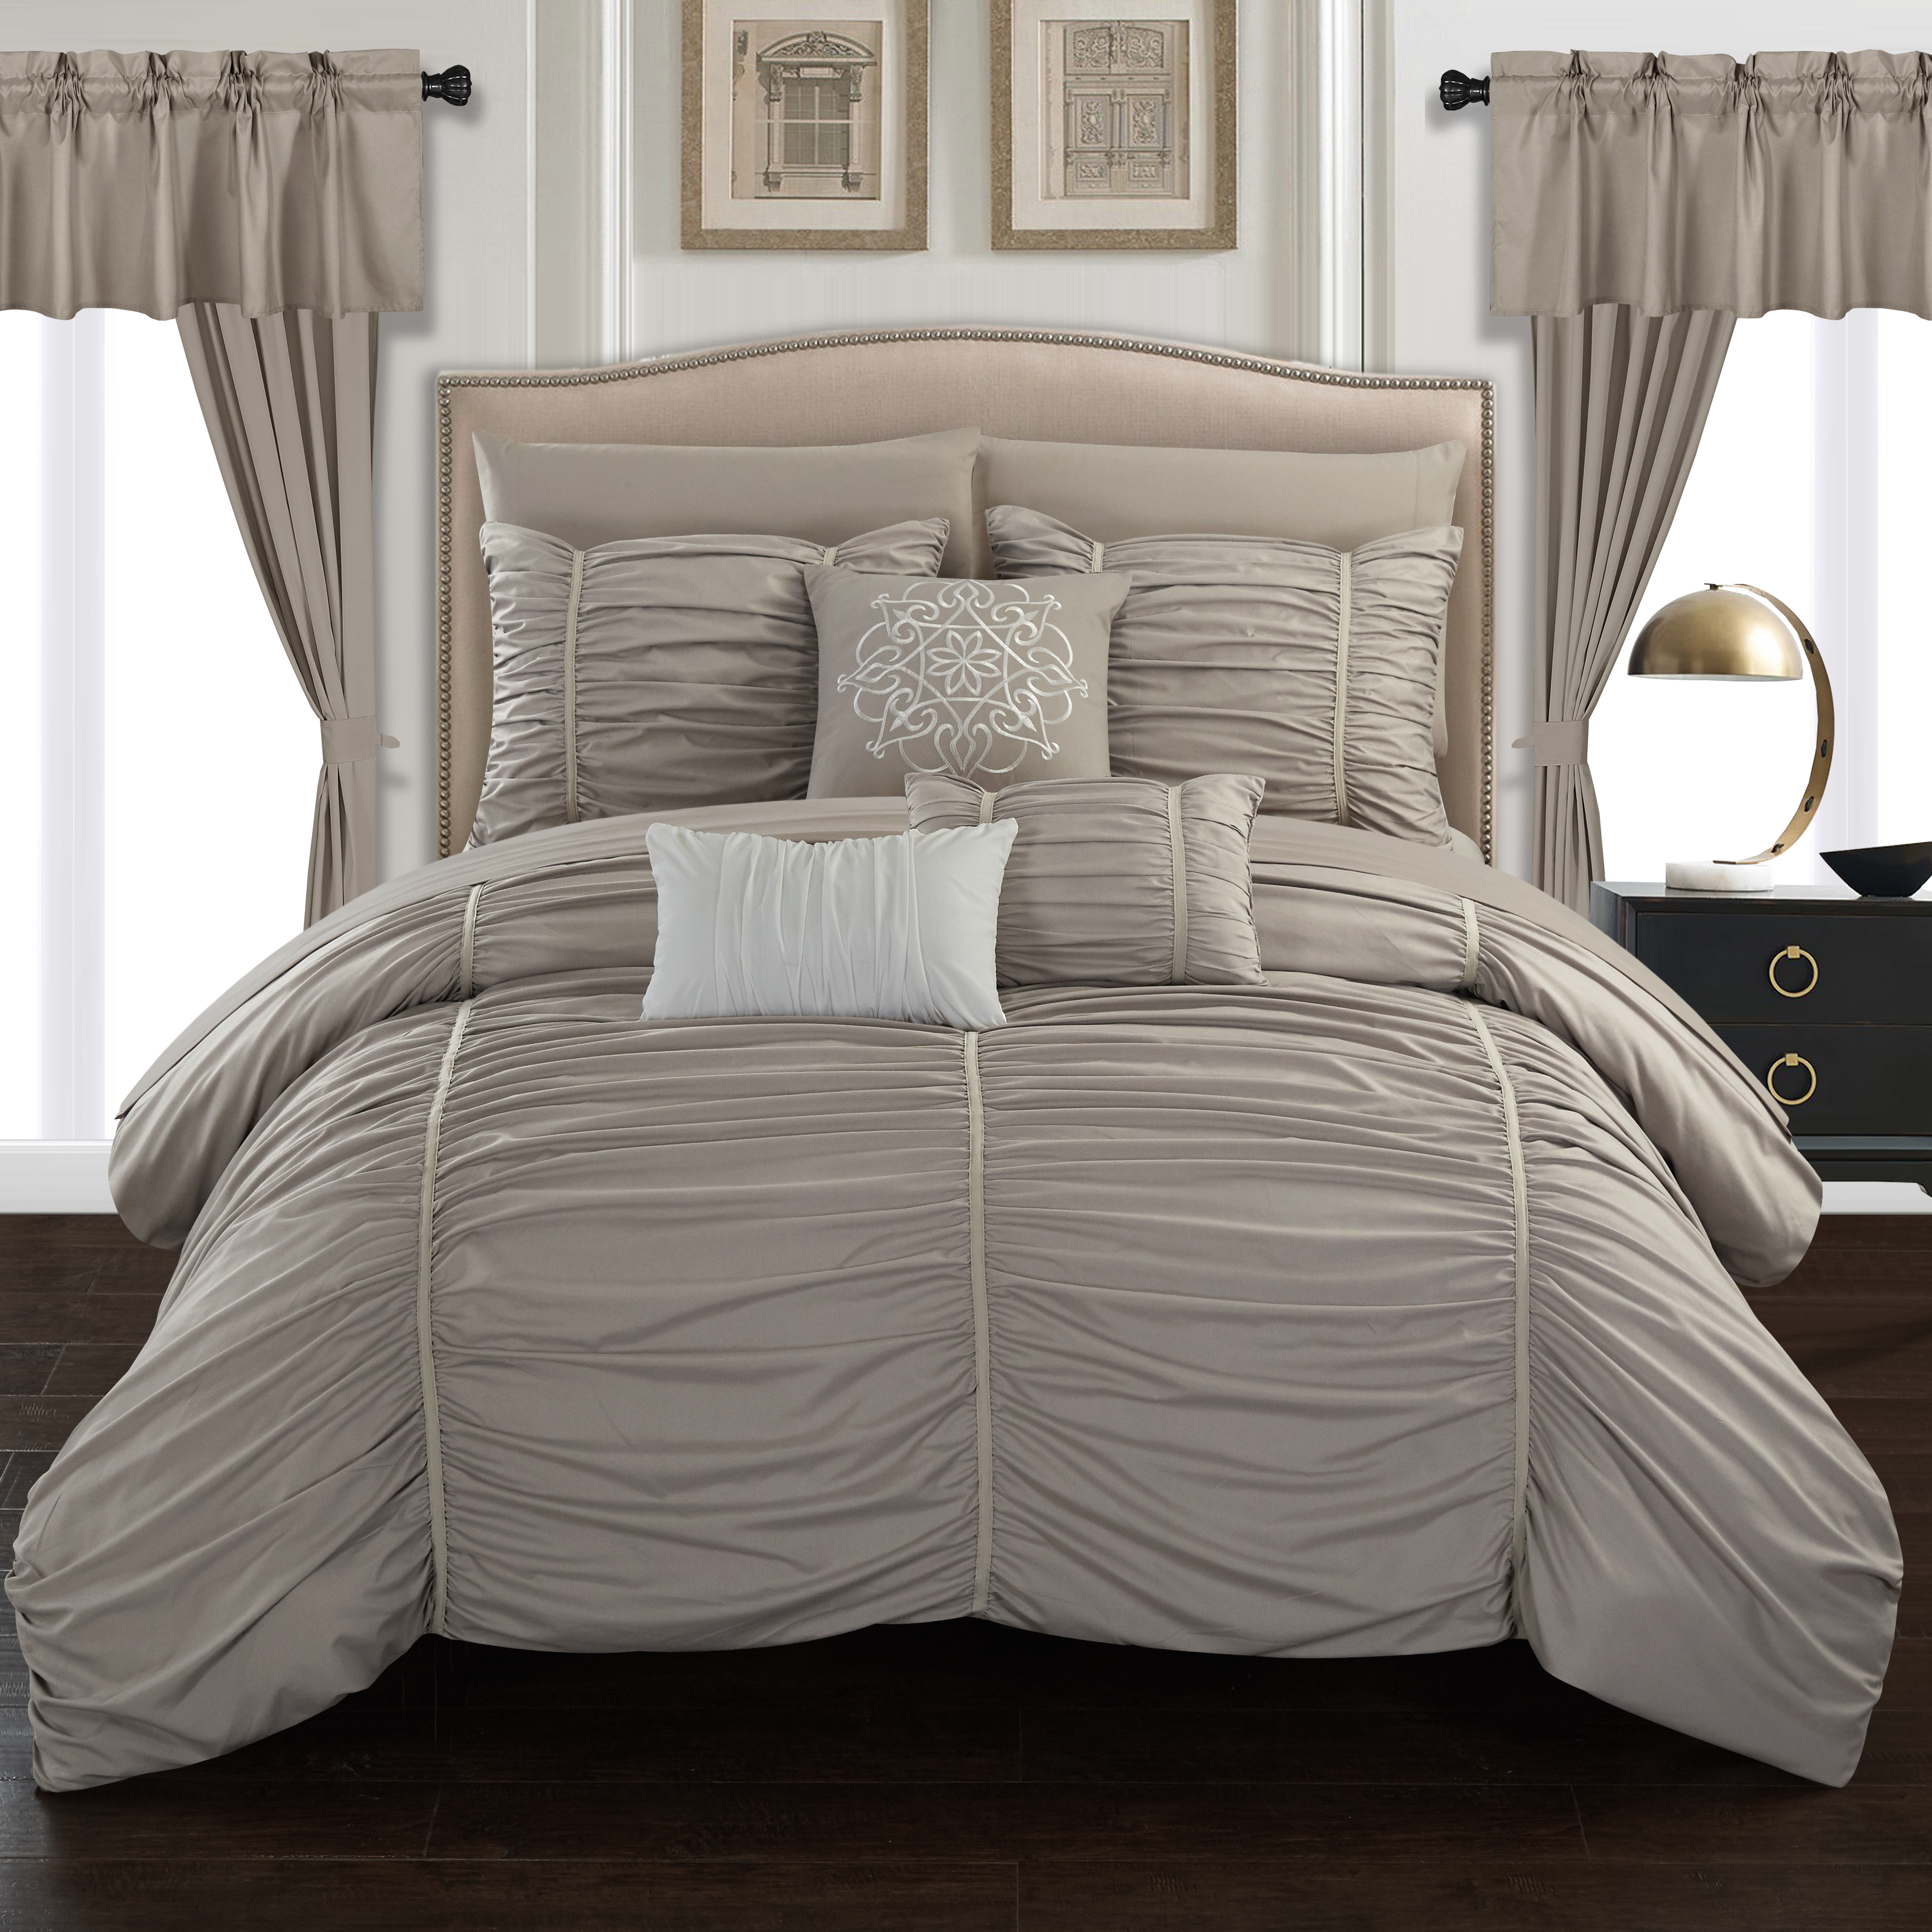 Gruyeres 20 Piece Comforter Set Ruffled Ruched Designer Bedding - Taupe, King